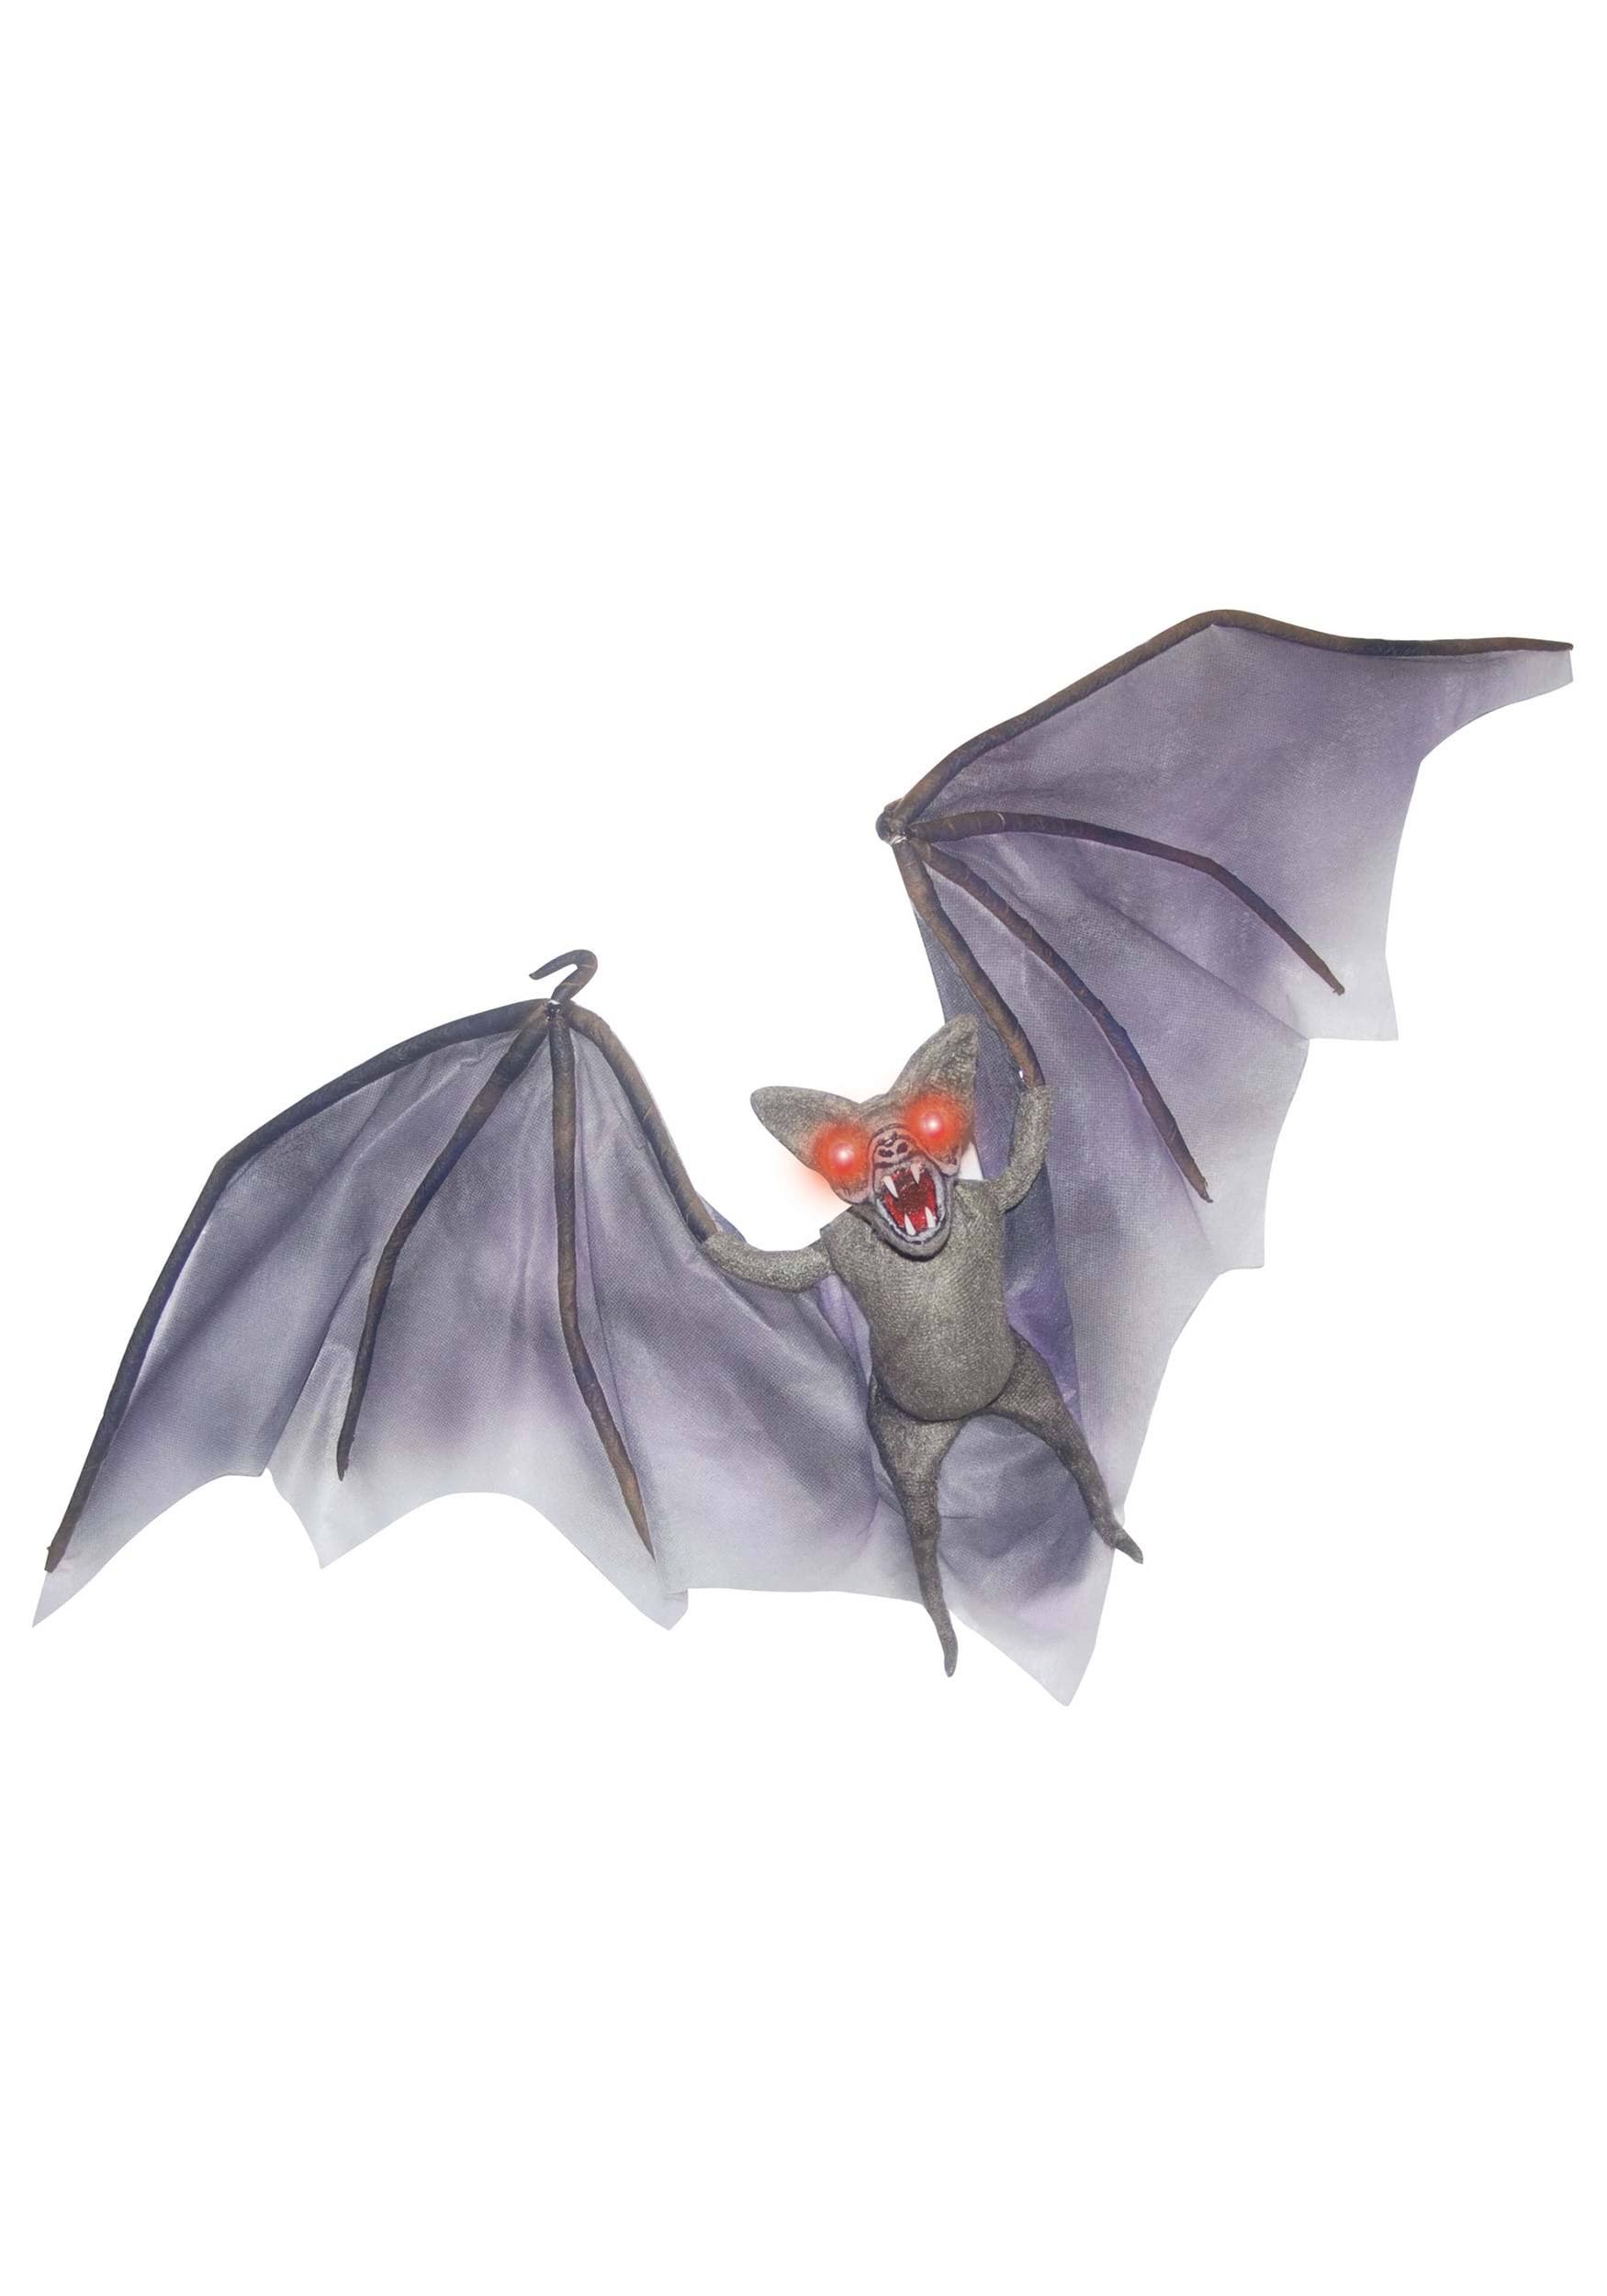 Sunstar Halloween Haunted House Prop - Light up Demon Bat, with 4' Wing Span